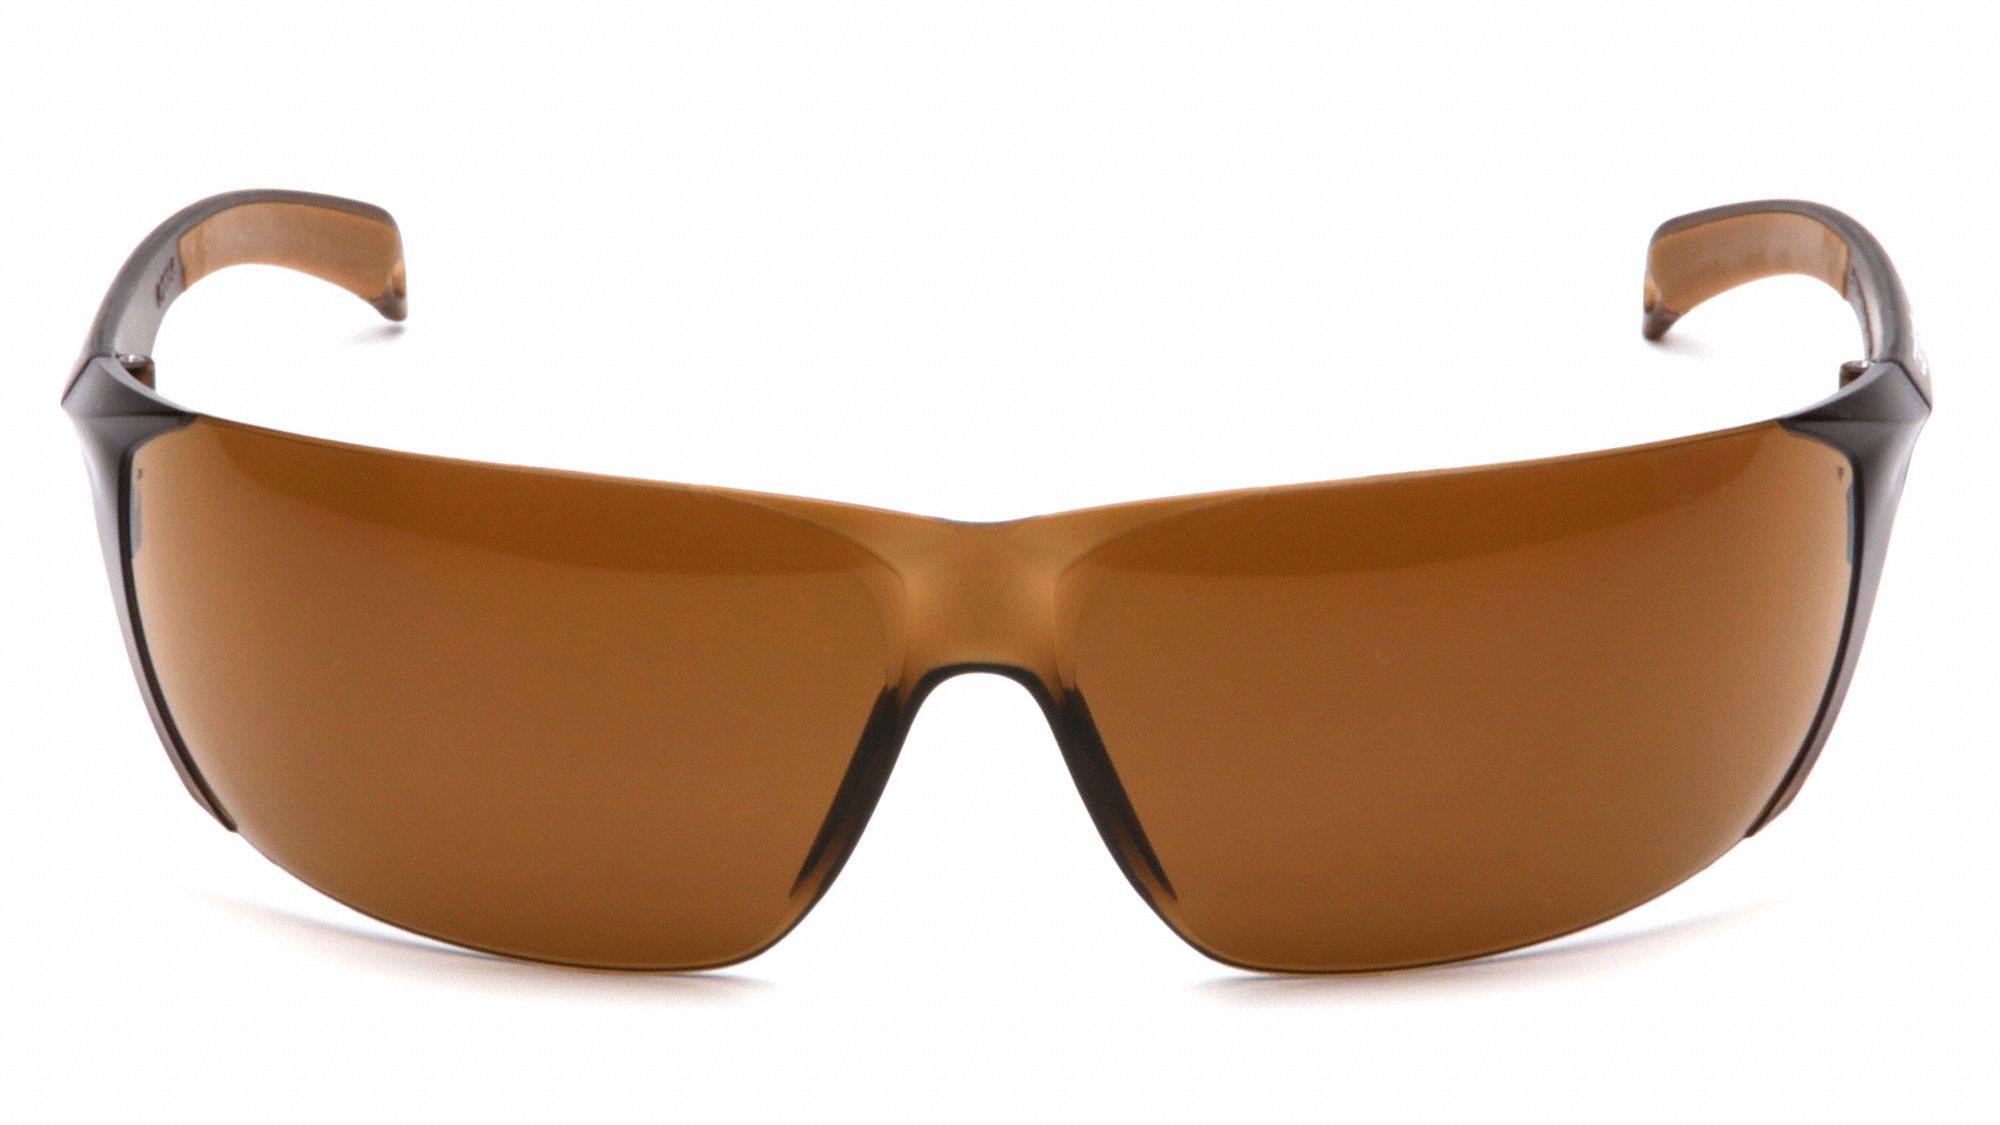 Carhartt CH118S Billings Bronze Lens/Frame Shop Work Safety Glasses 